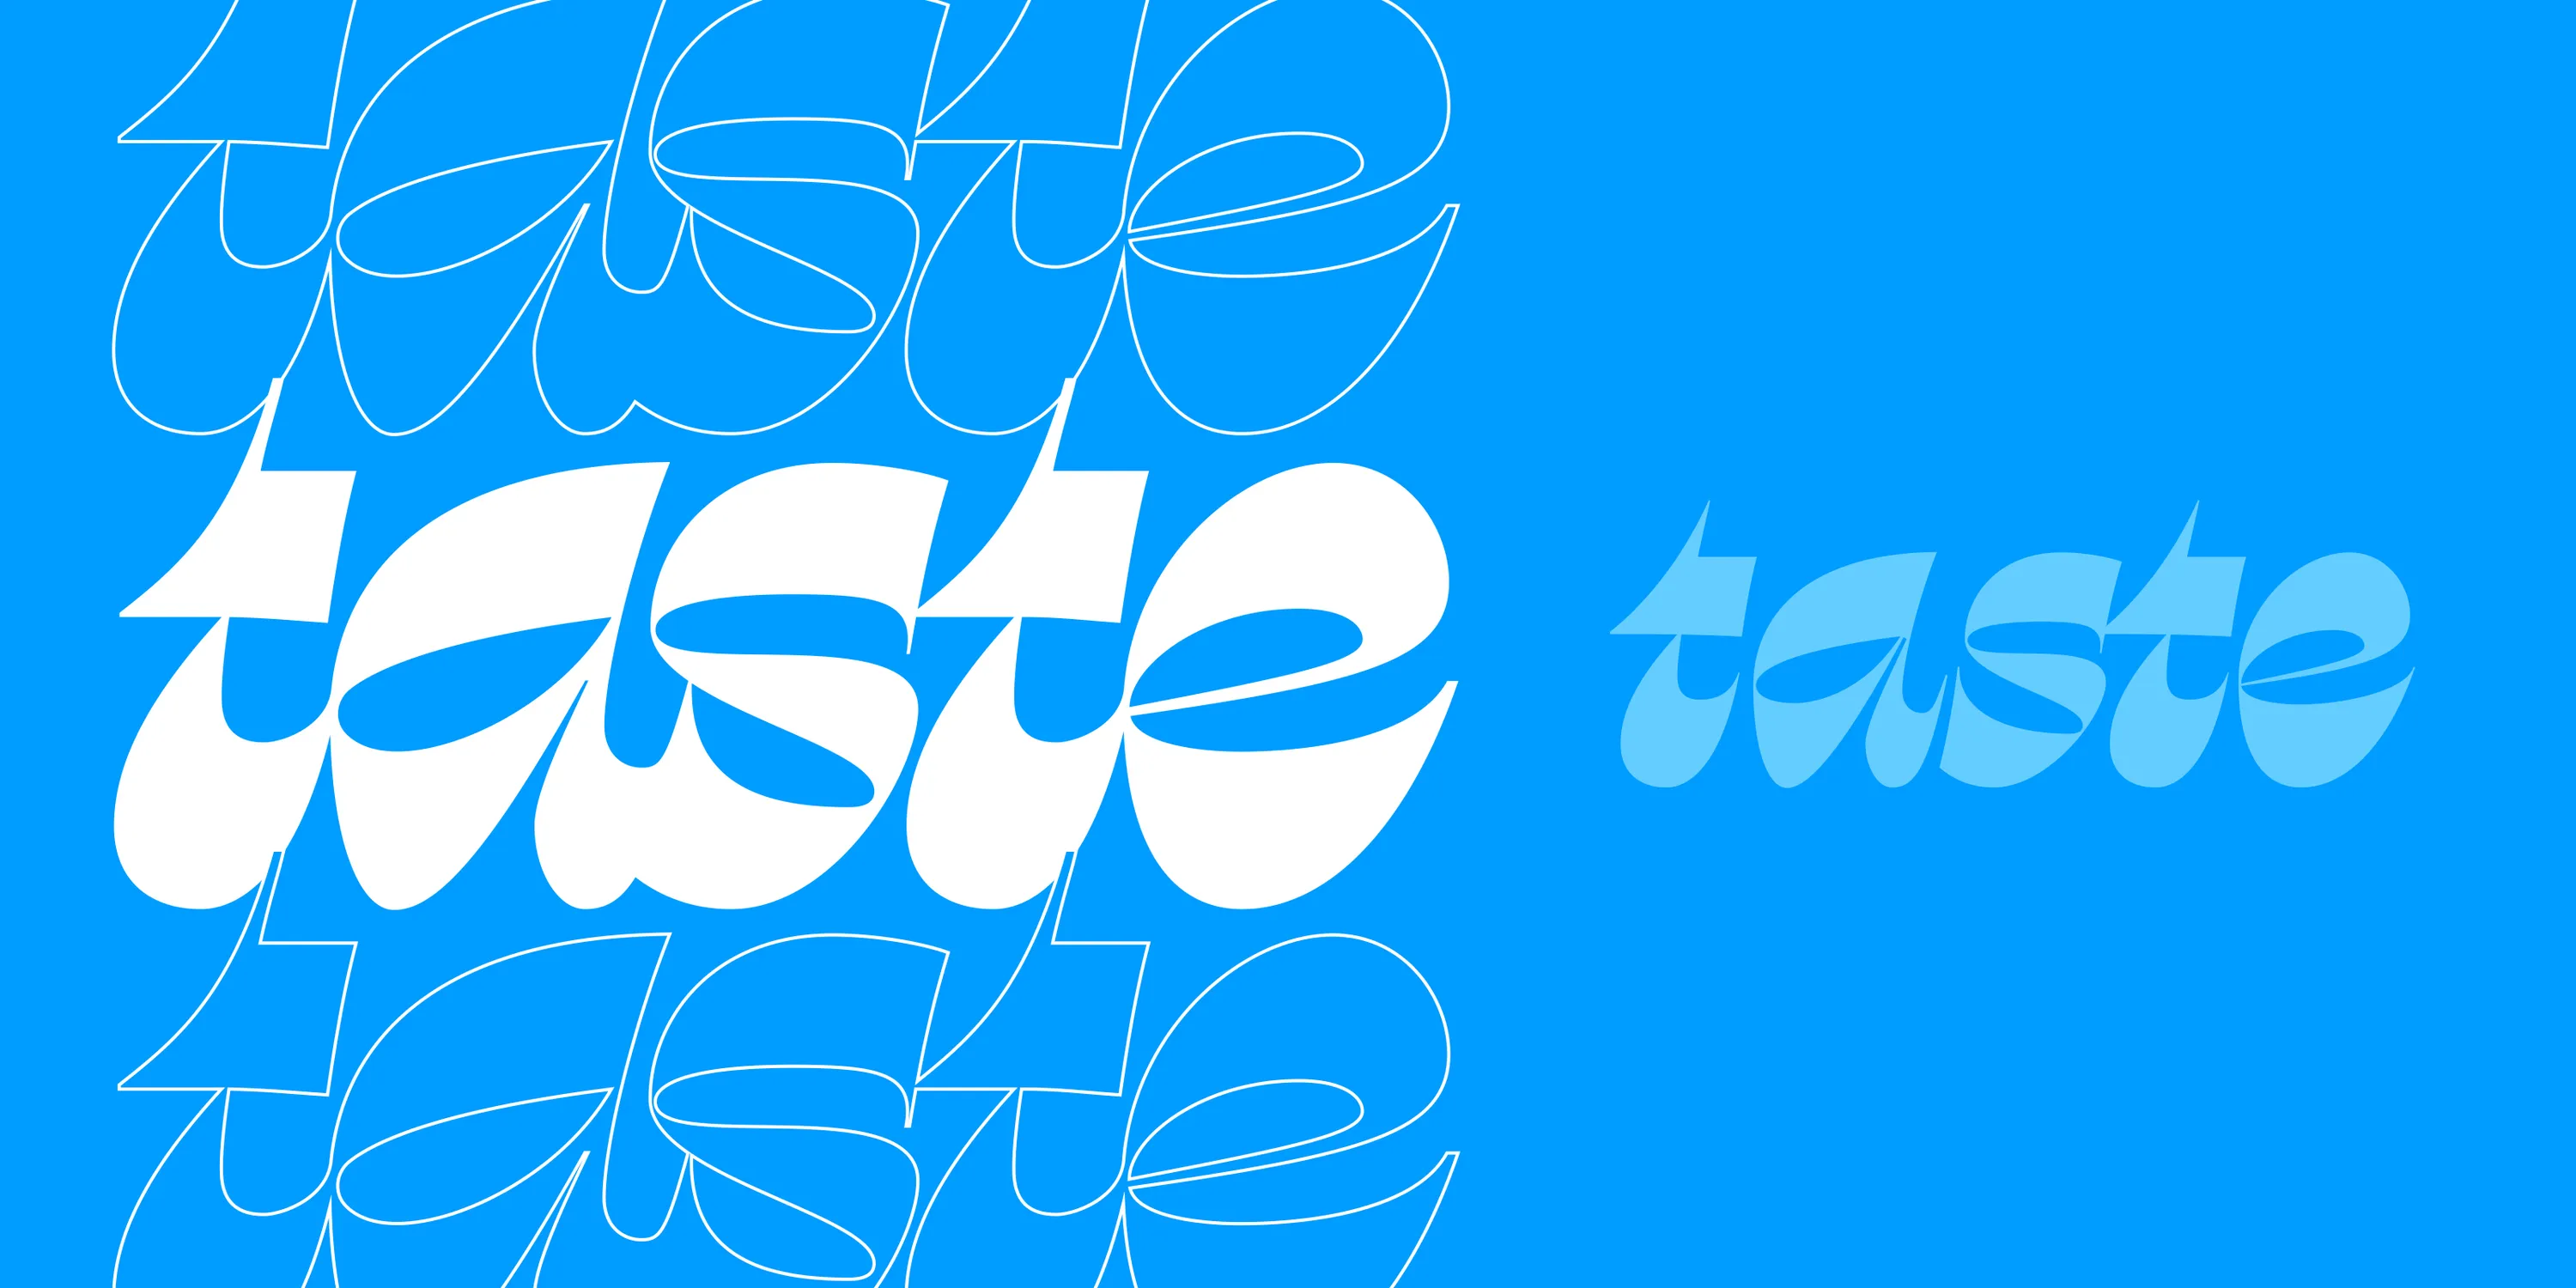 Taste Of Chicago Design Span typography branding 09